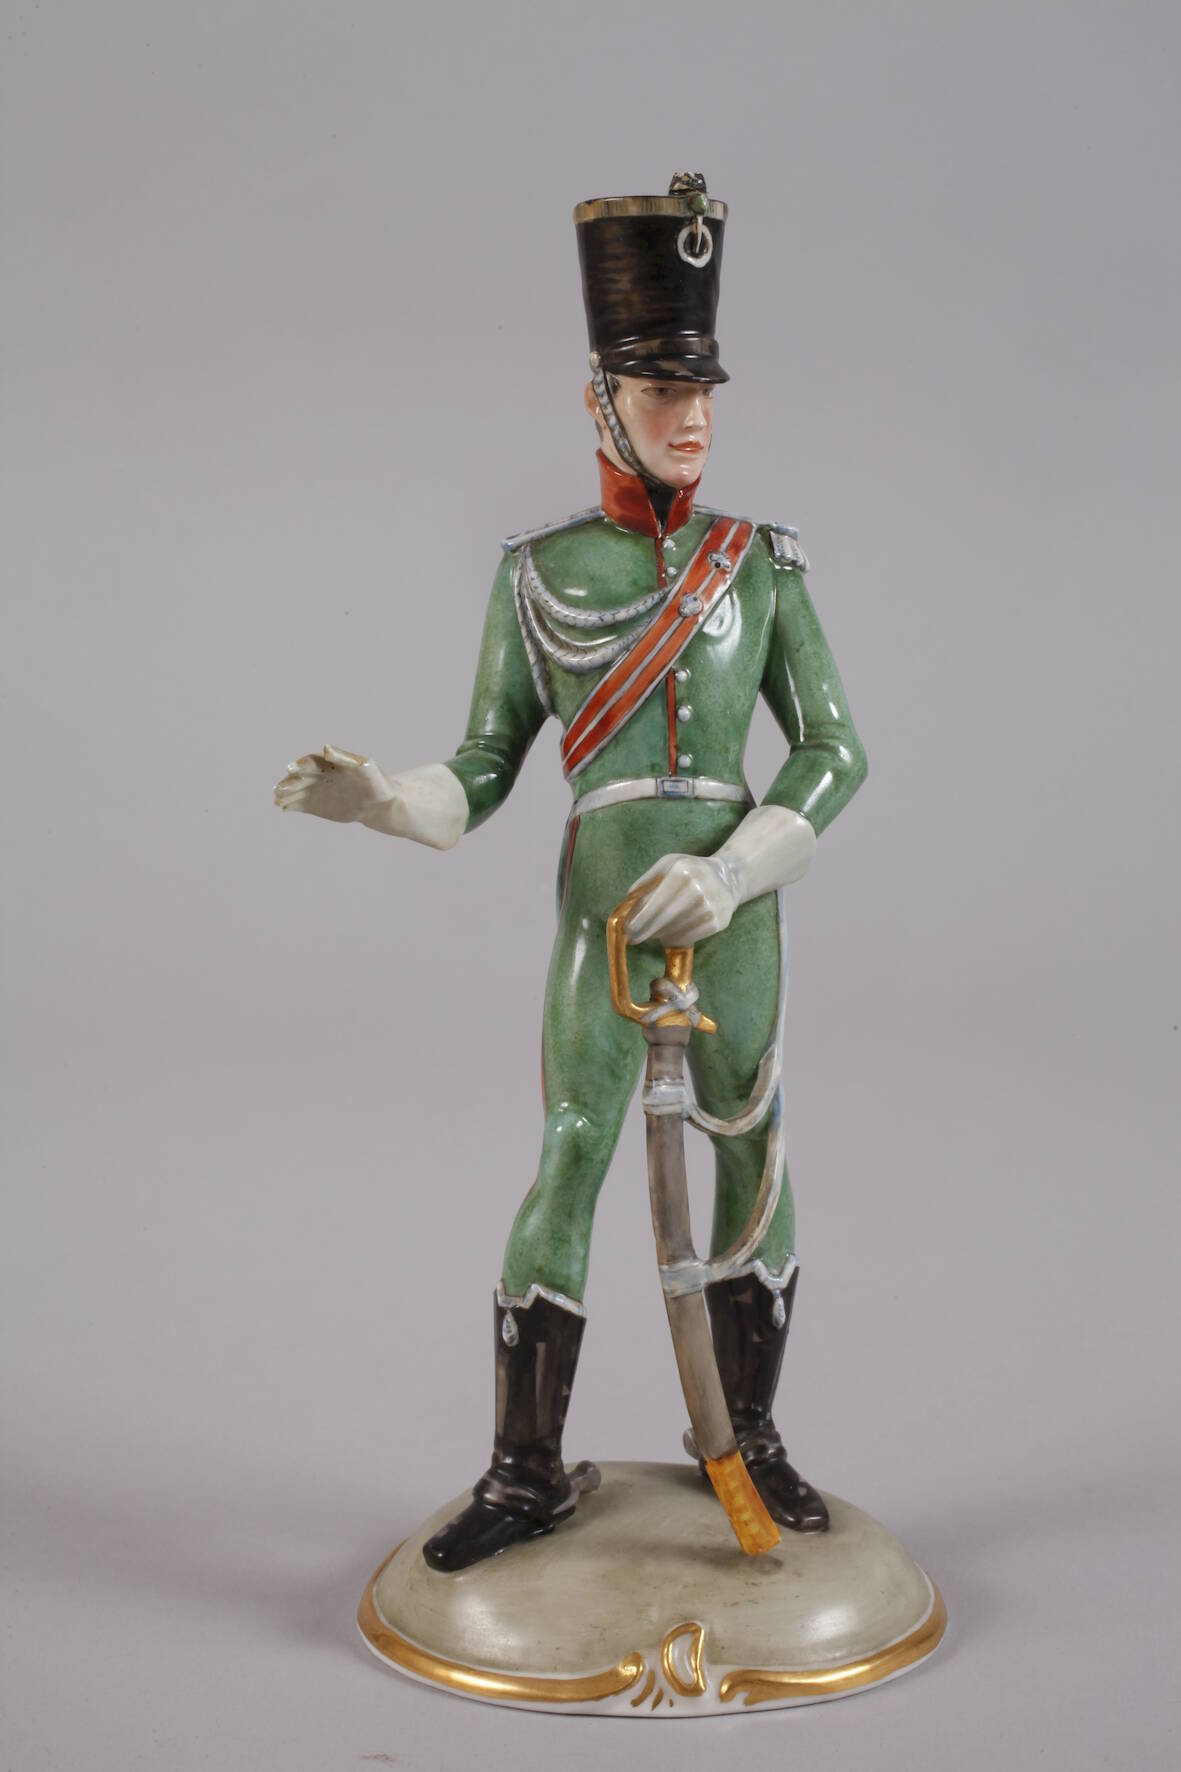 Nymphenburg "Basler Kavallerie Offizier 1811" - Image 2 of 6